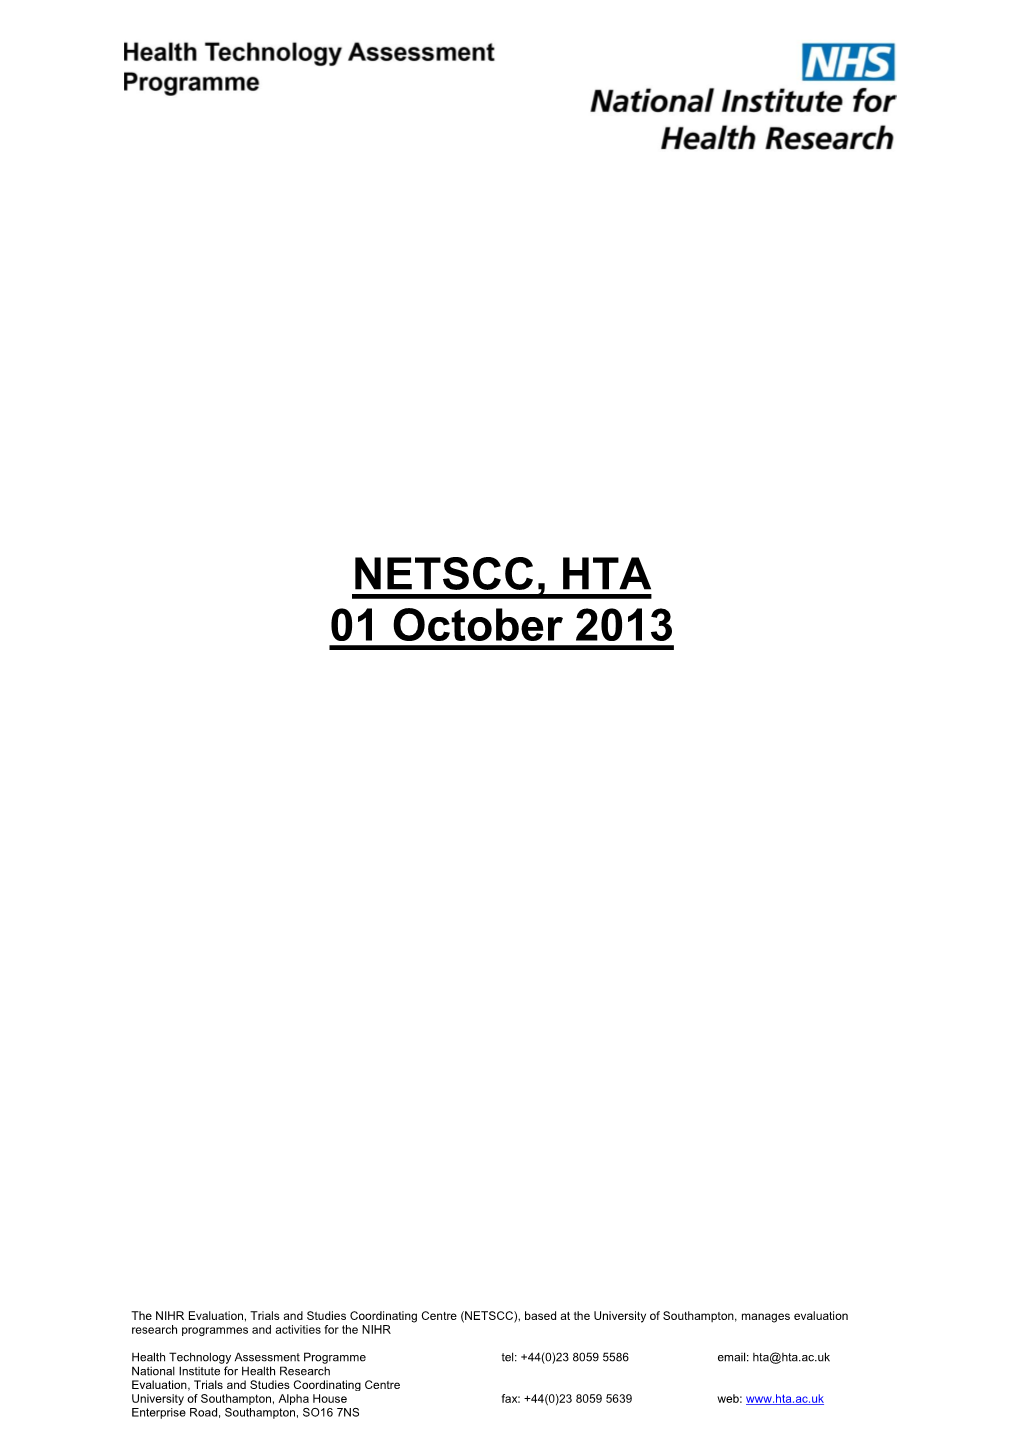 NETSCC, HTA 01 October 2013